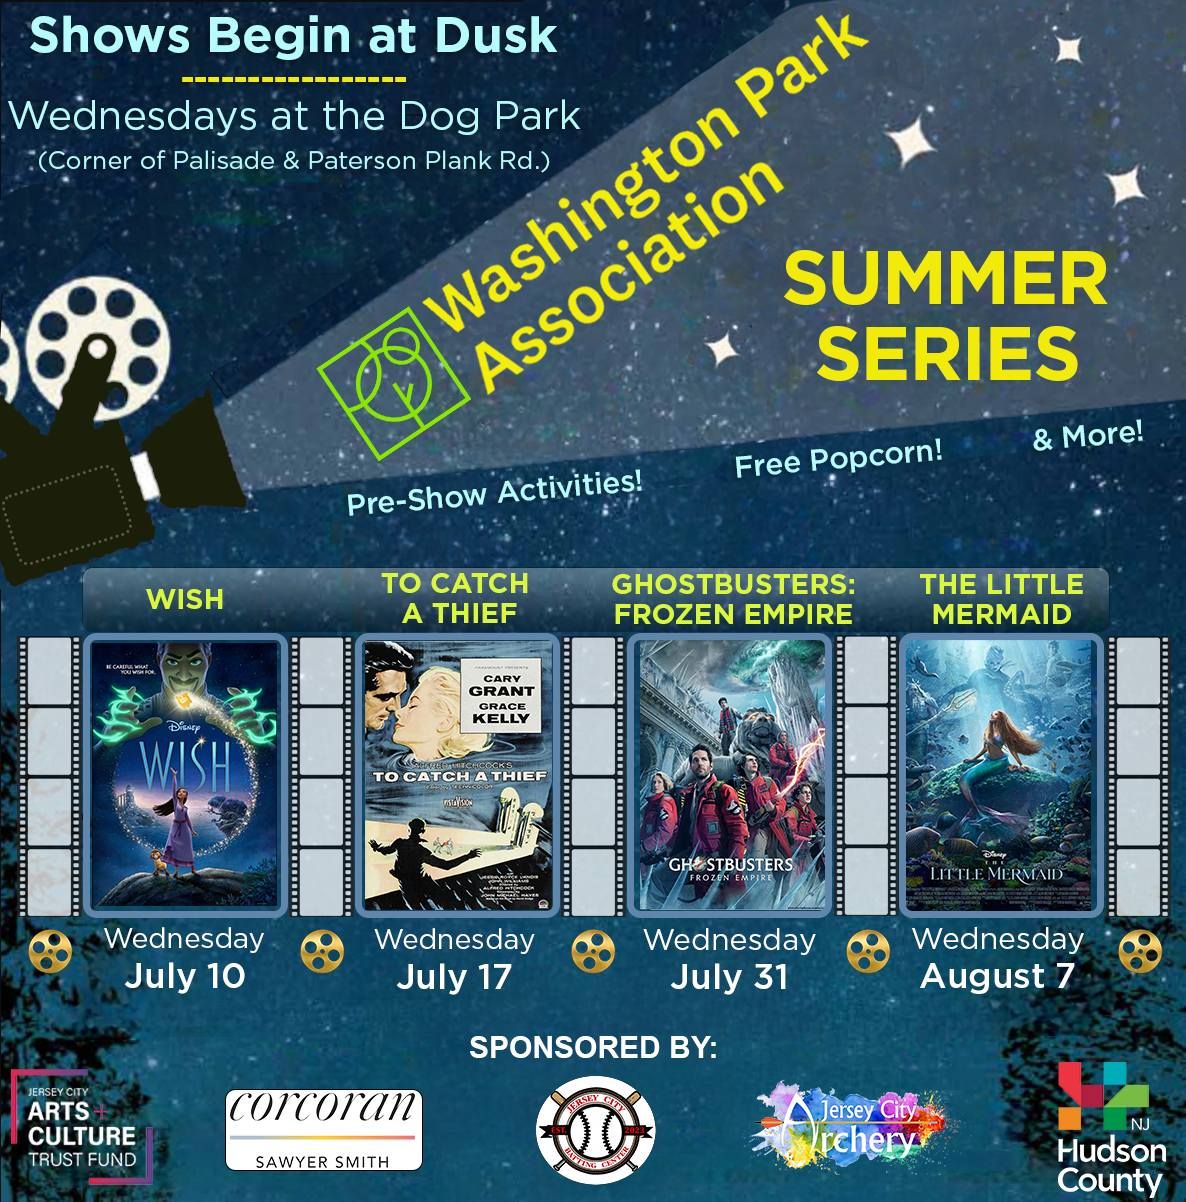 Washington Park Summer Series!